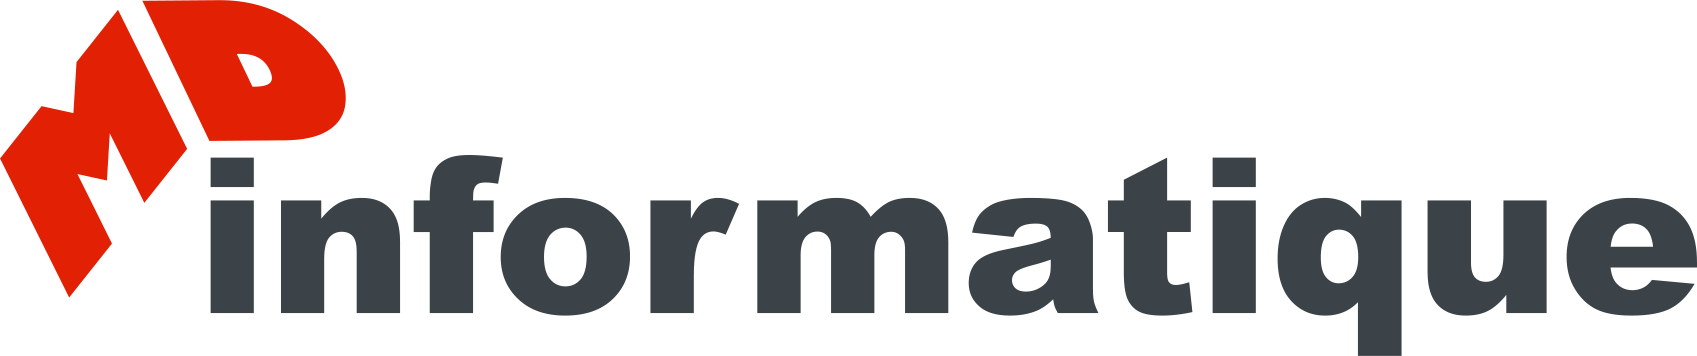 MD Informatique logo